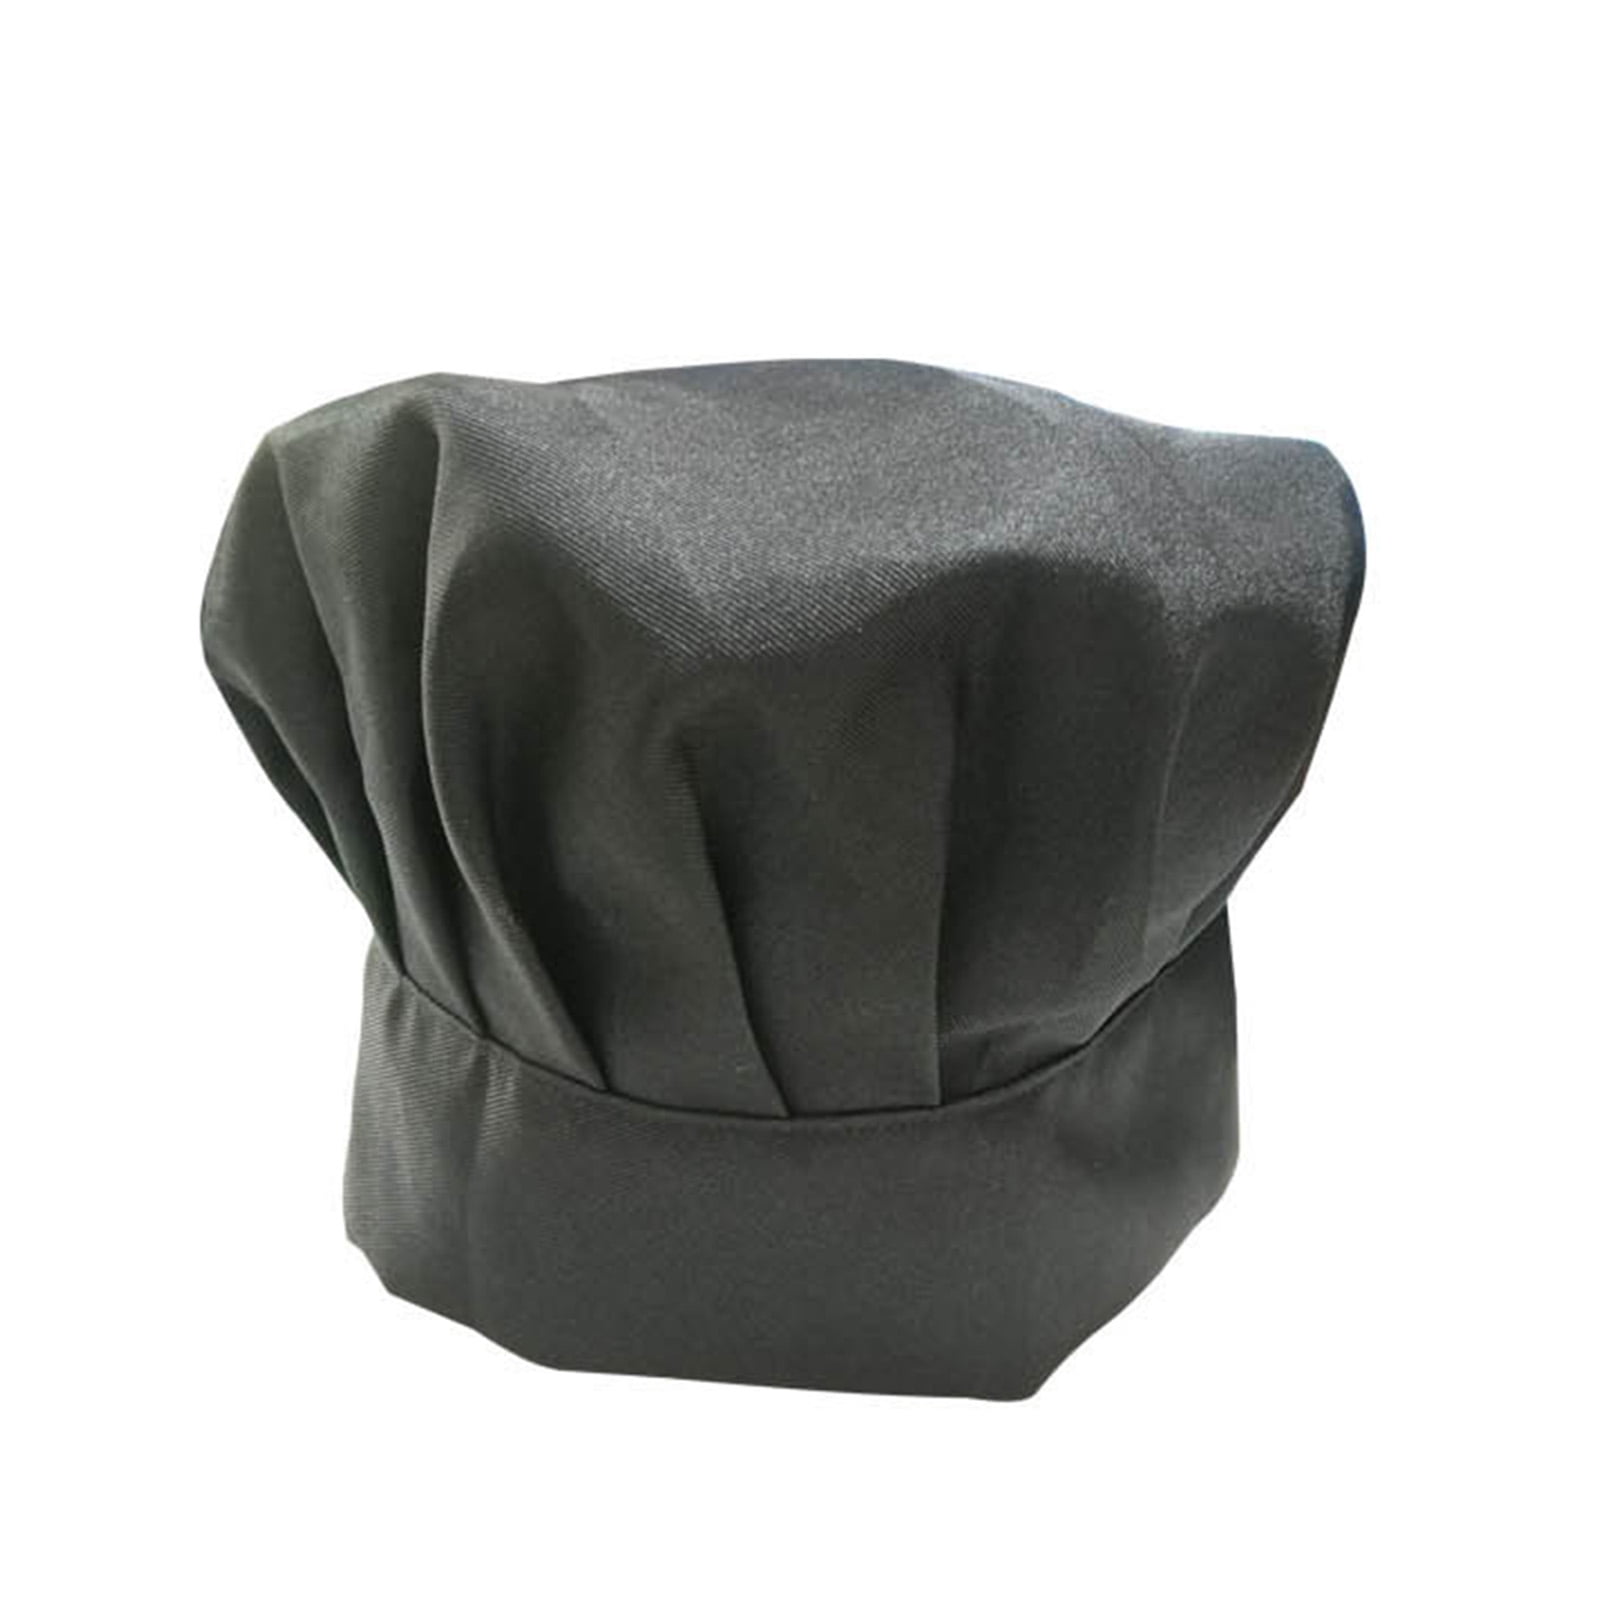 Details about   Pro Men Women Chef Hat Cap Adjustable Kitchen Cooking Baker Headwear Newly 